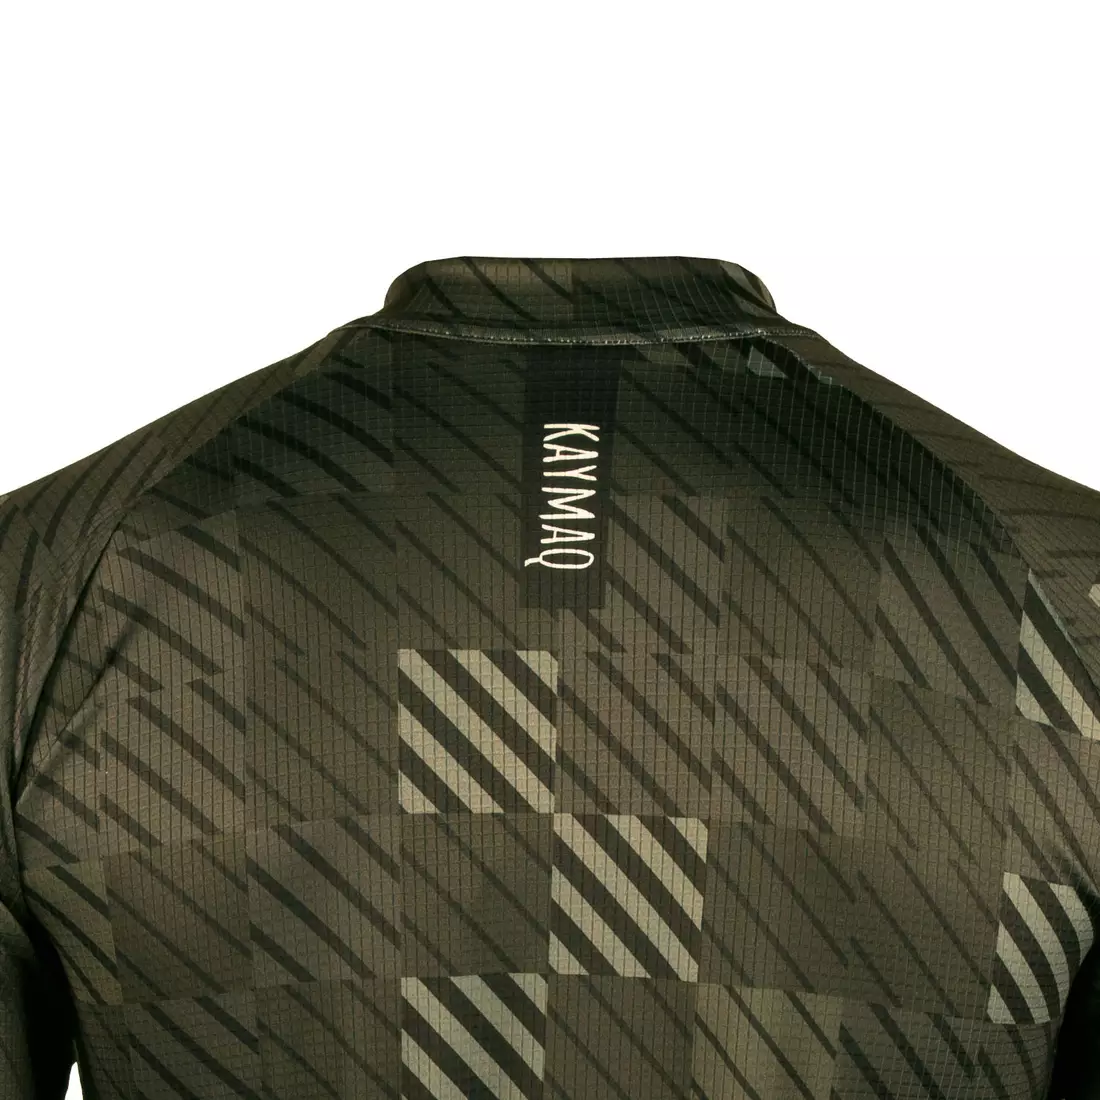 KAYMAQ DESIGN M39 men's cycling thermal jersey